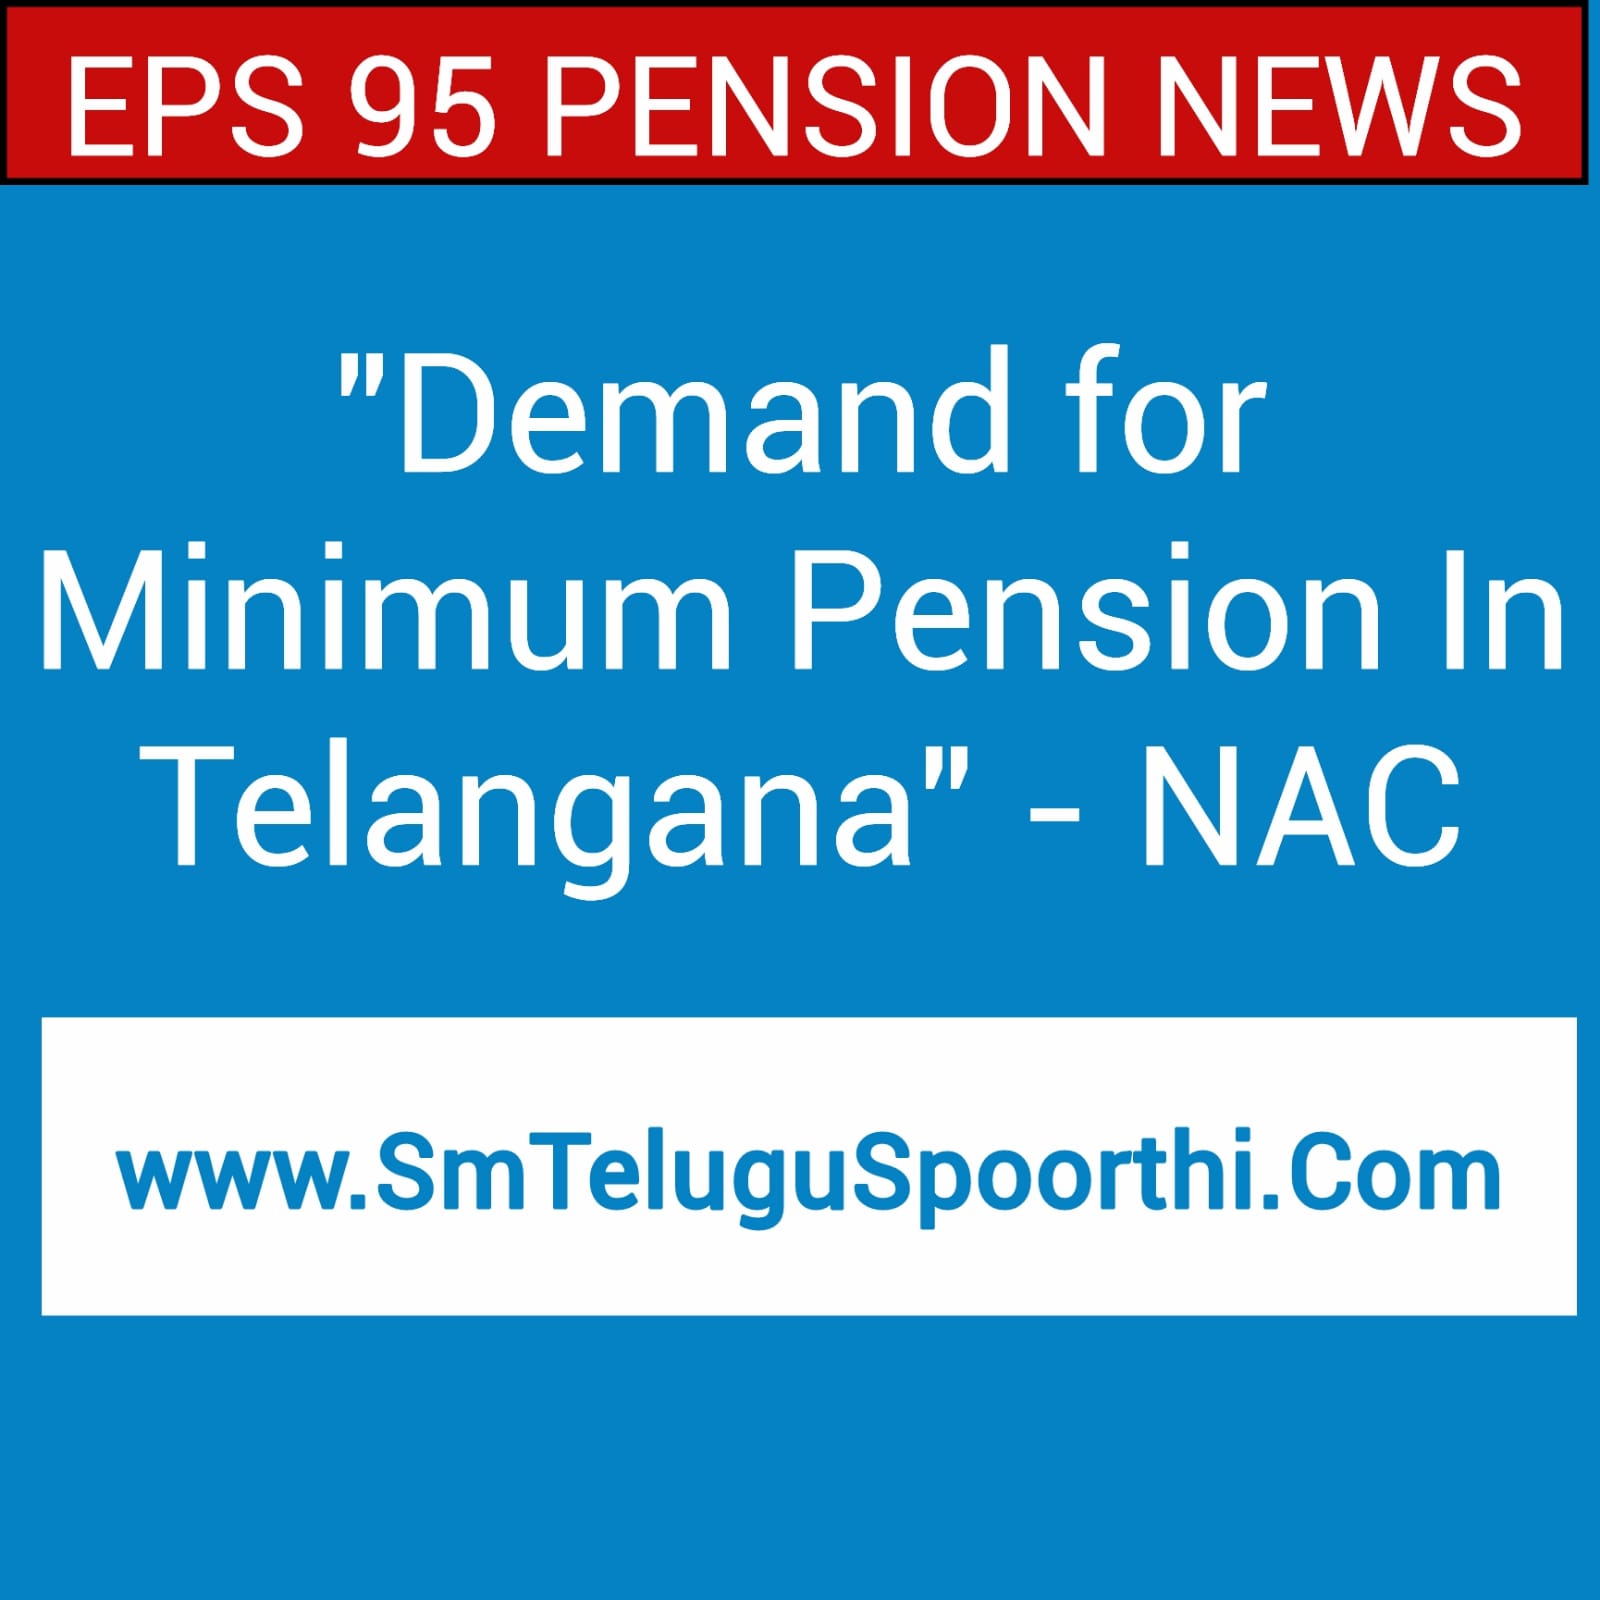 Demand for minimum pension news